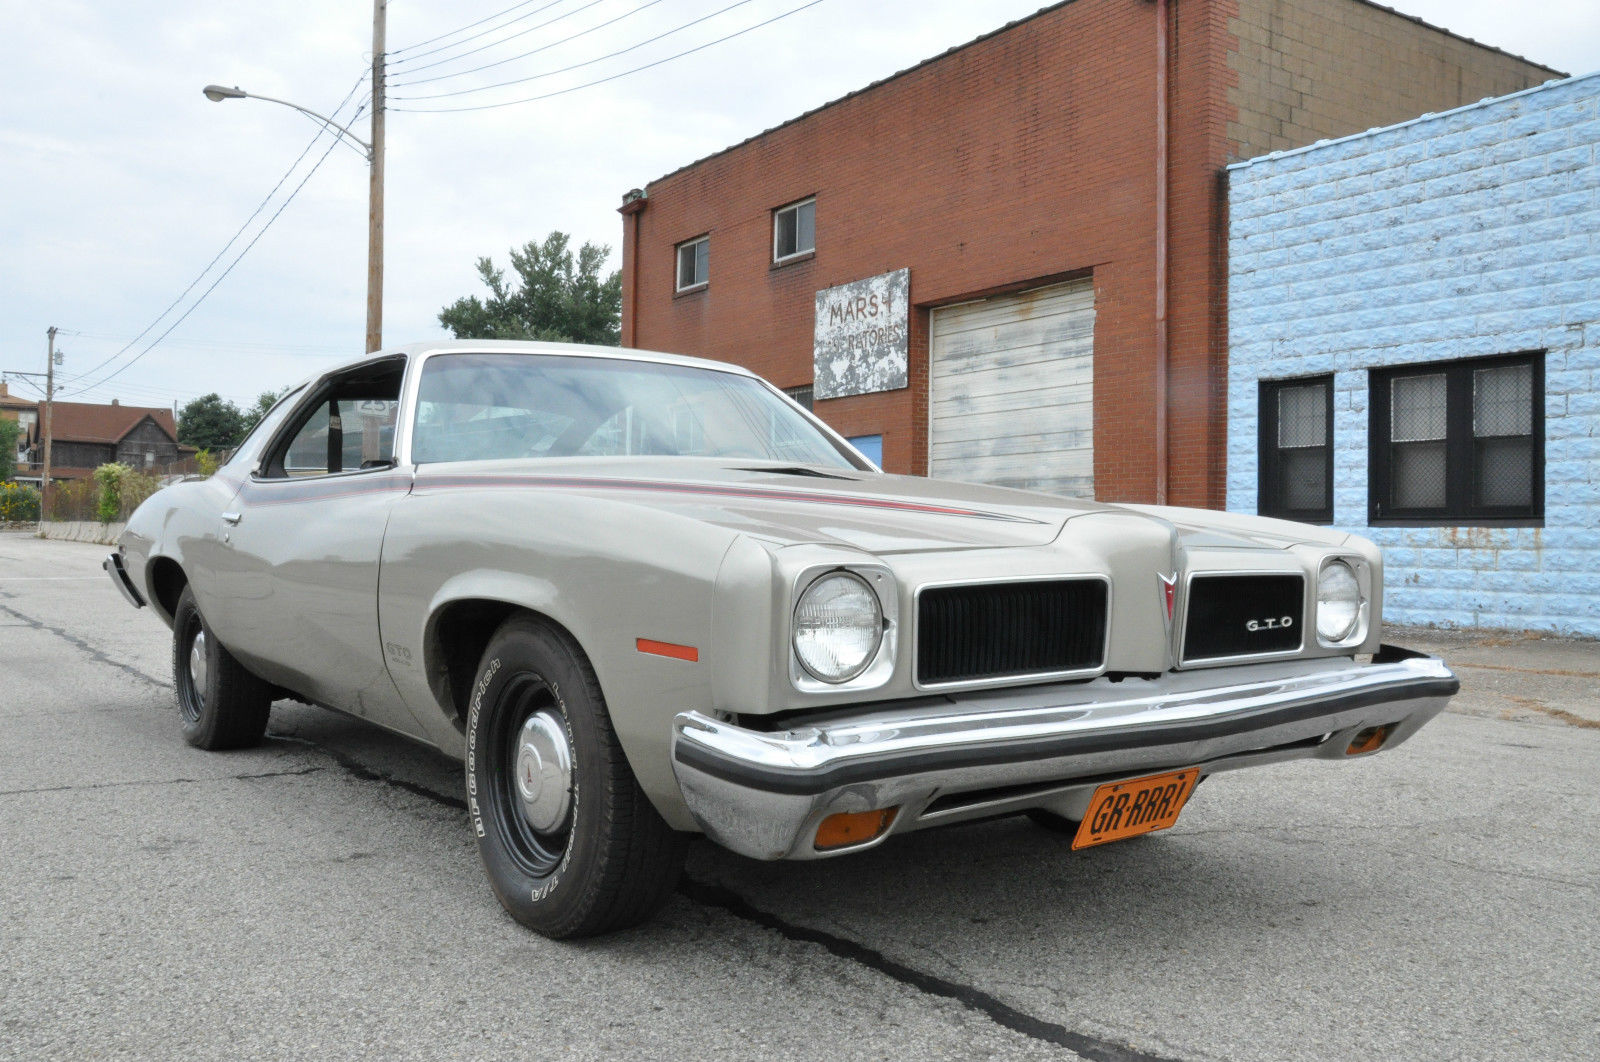 Ebay Find: 1973 Pontiac GTO, “The Rare One”